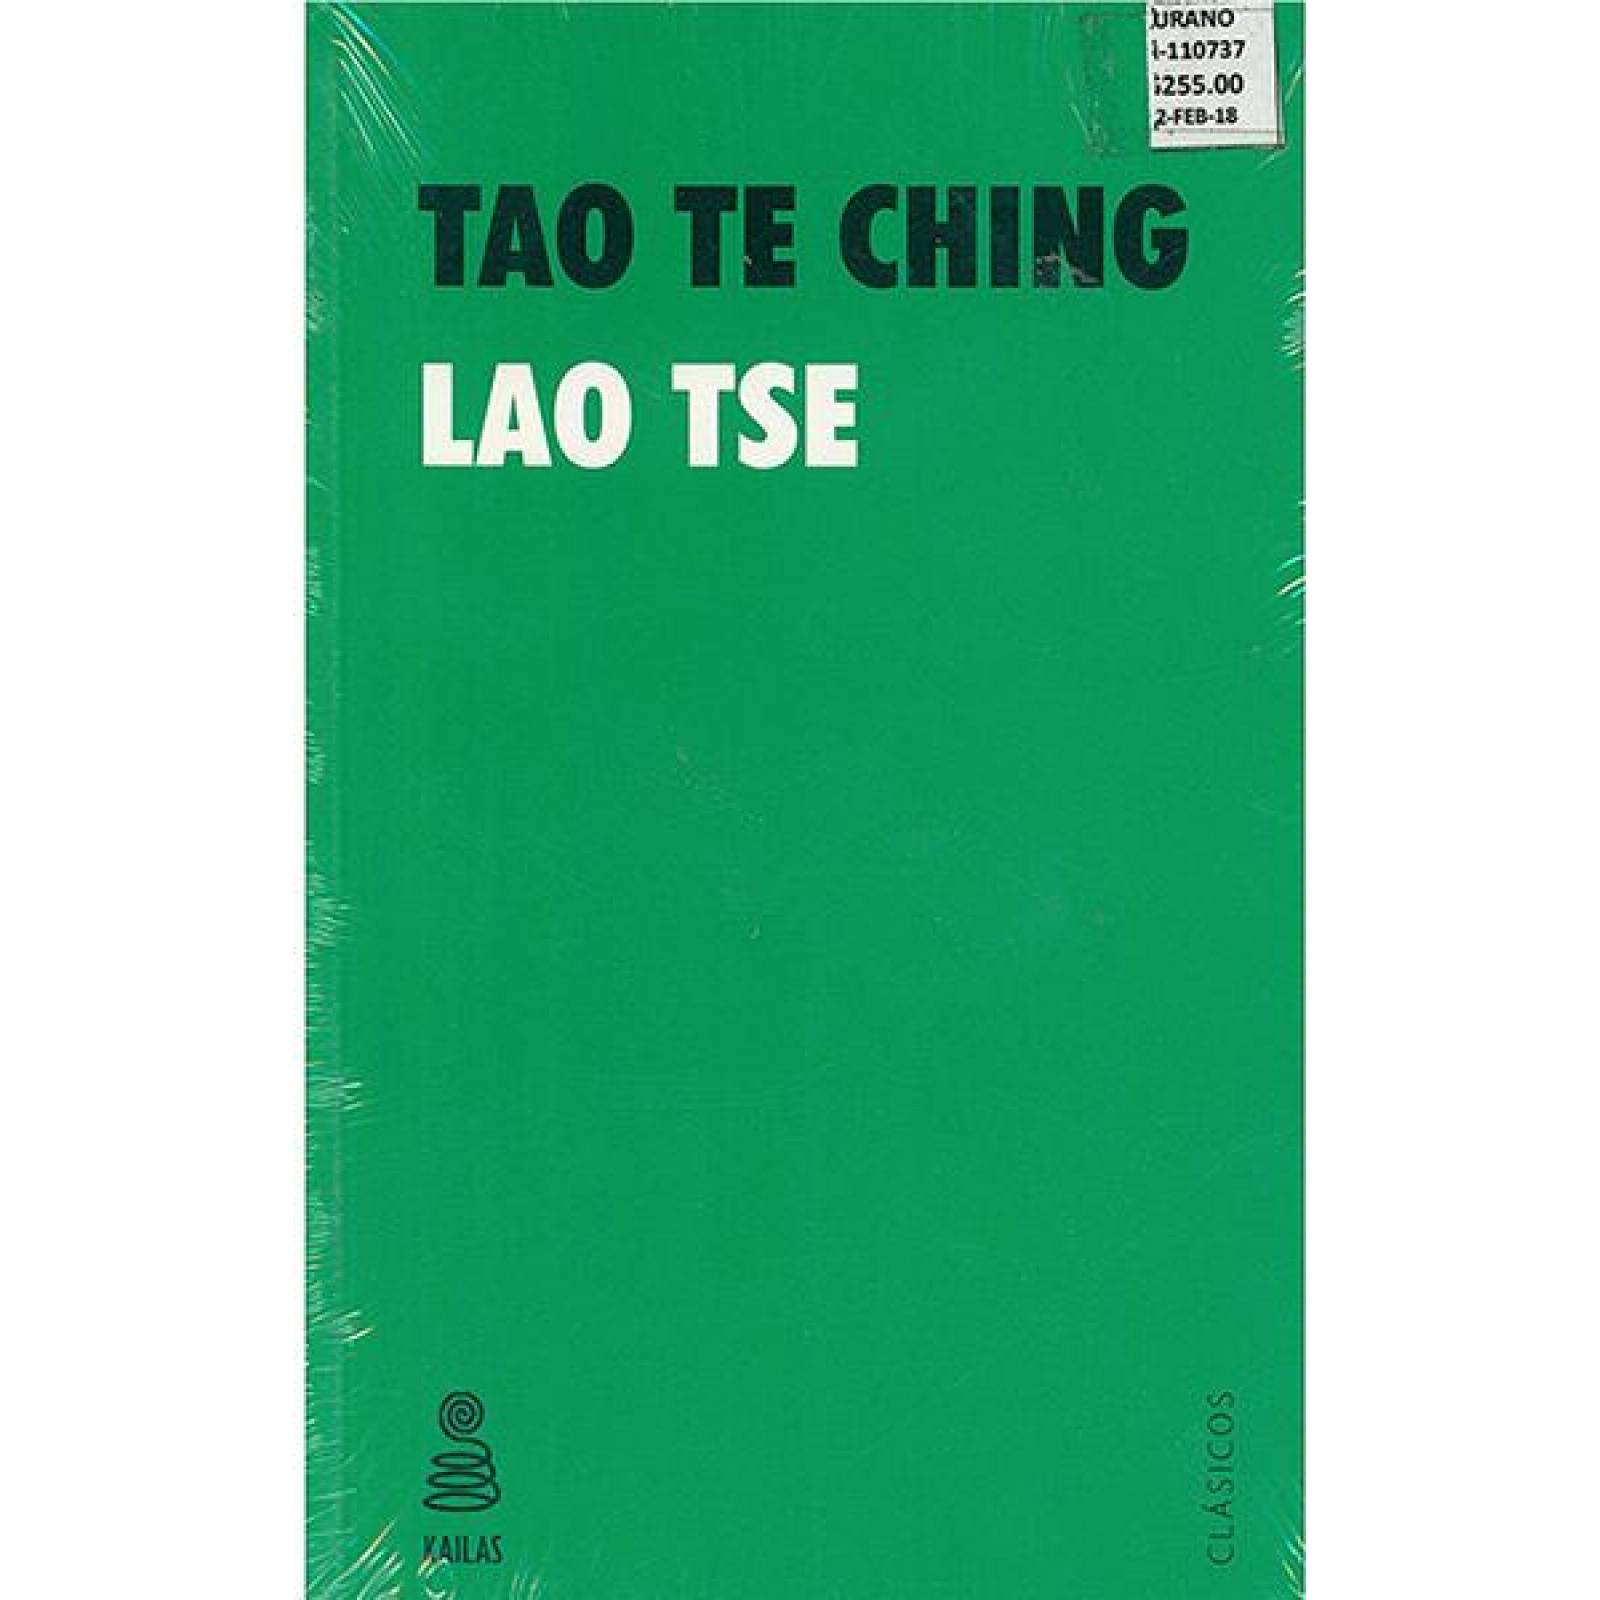 Tao te ching   